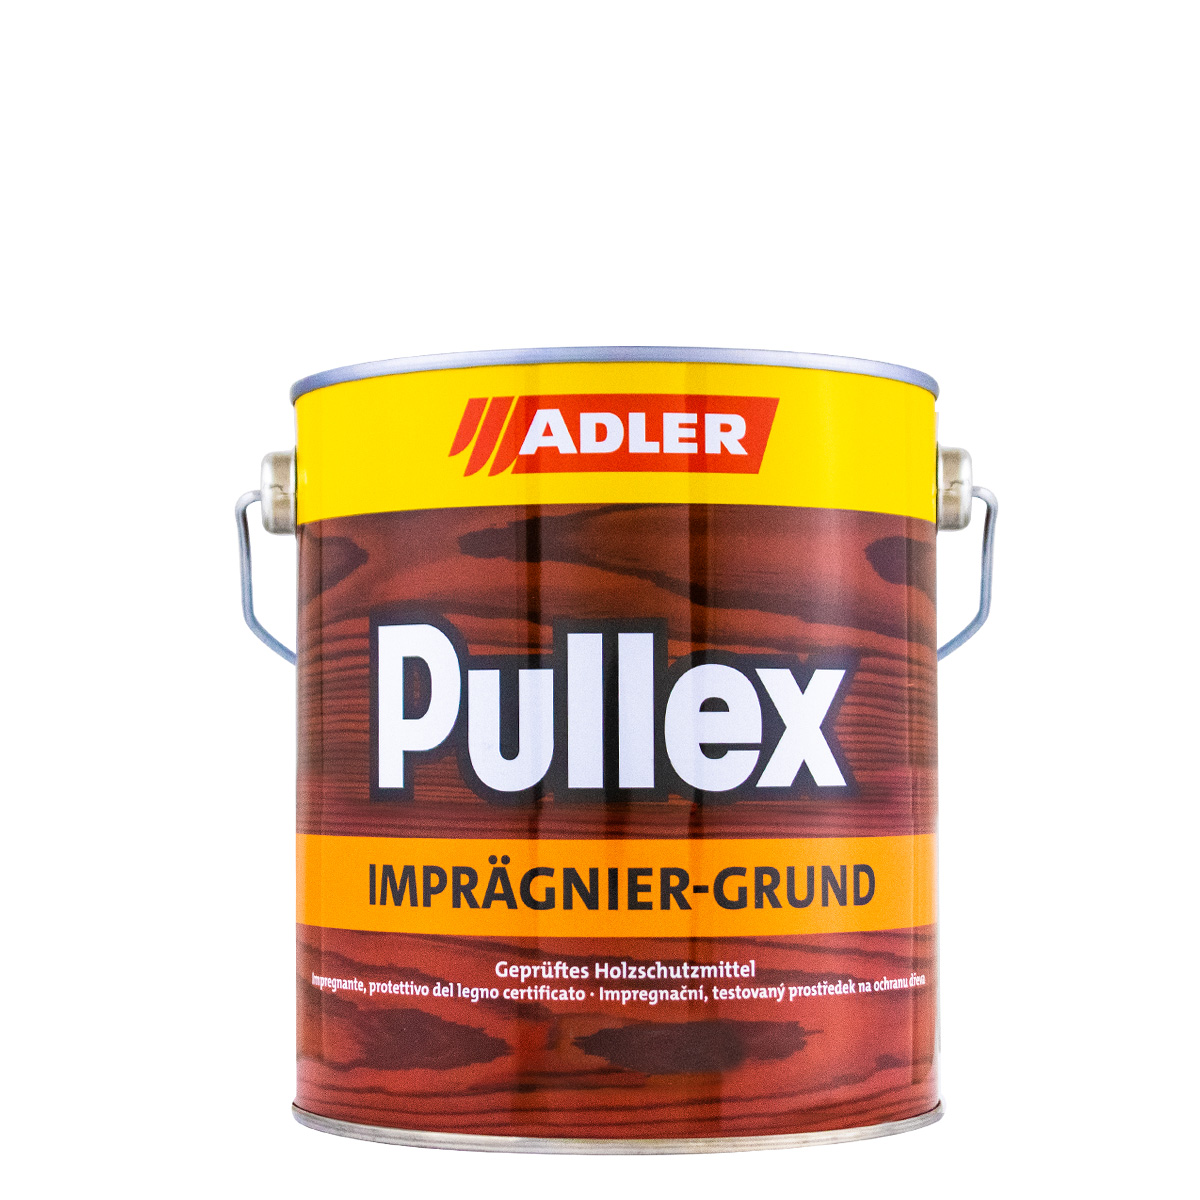 adler_pullex_impraegnier-grund_2,5L_gross